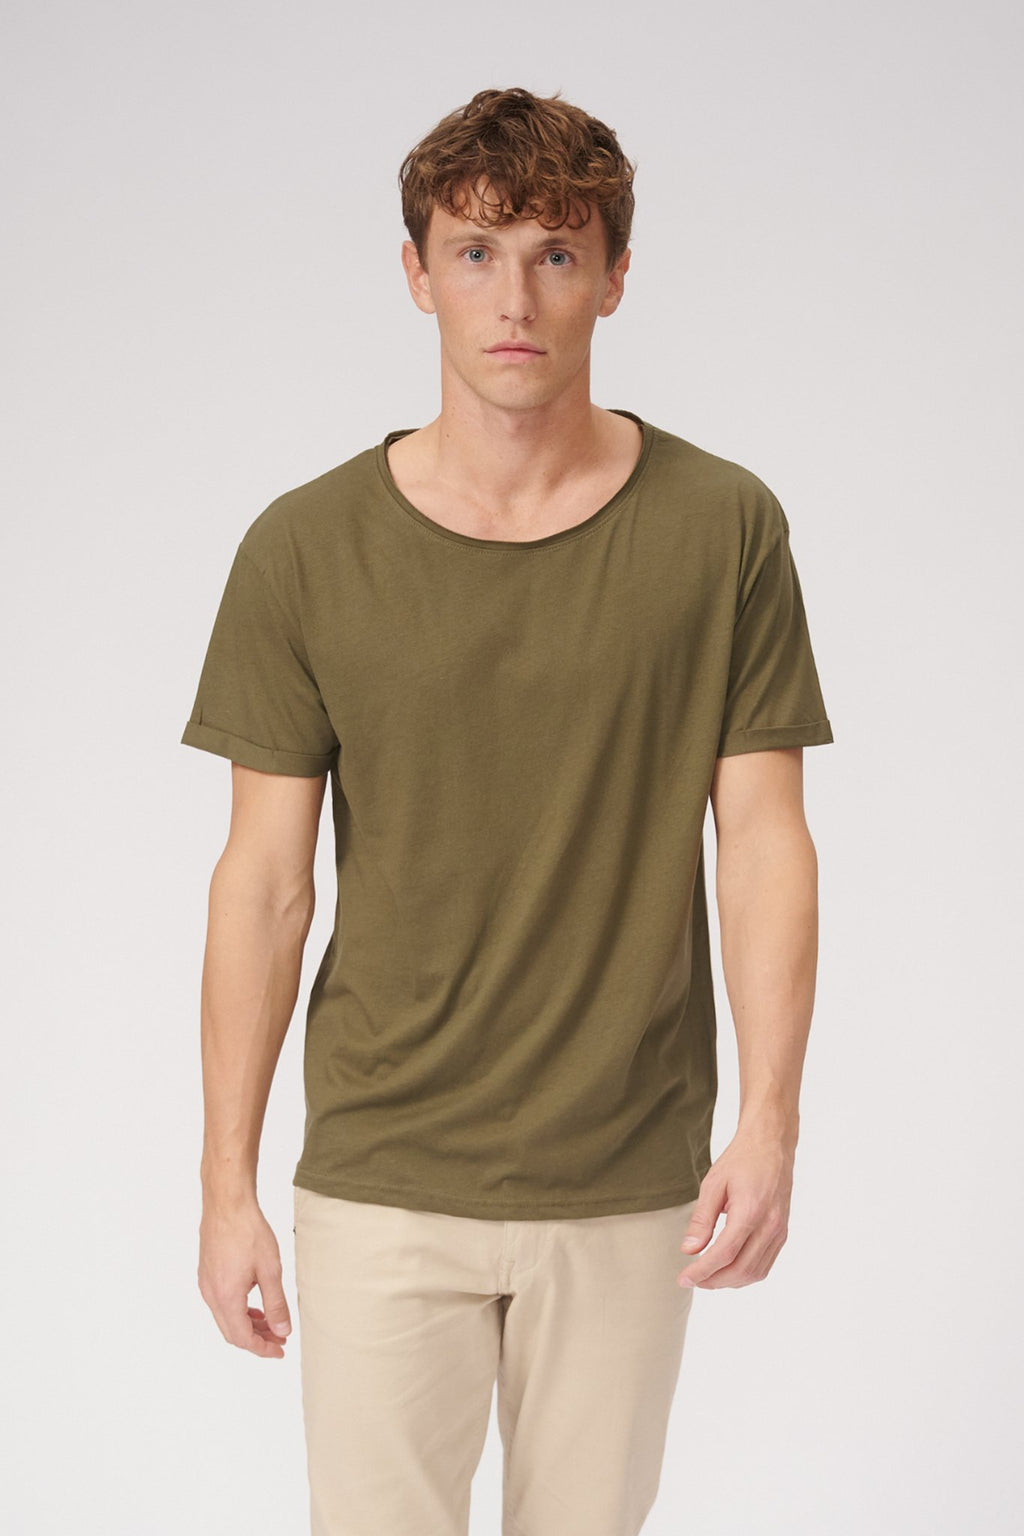 Camiseta de cuello crudo - Olive Green